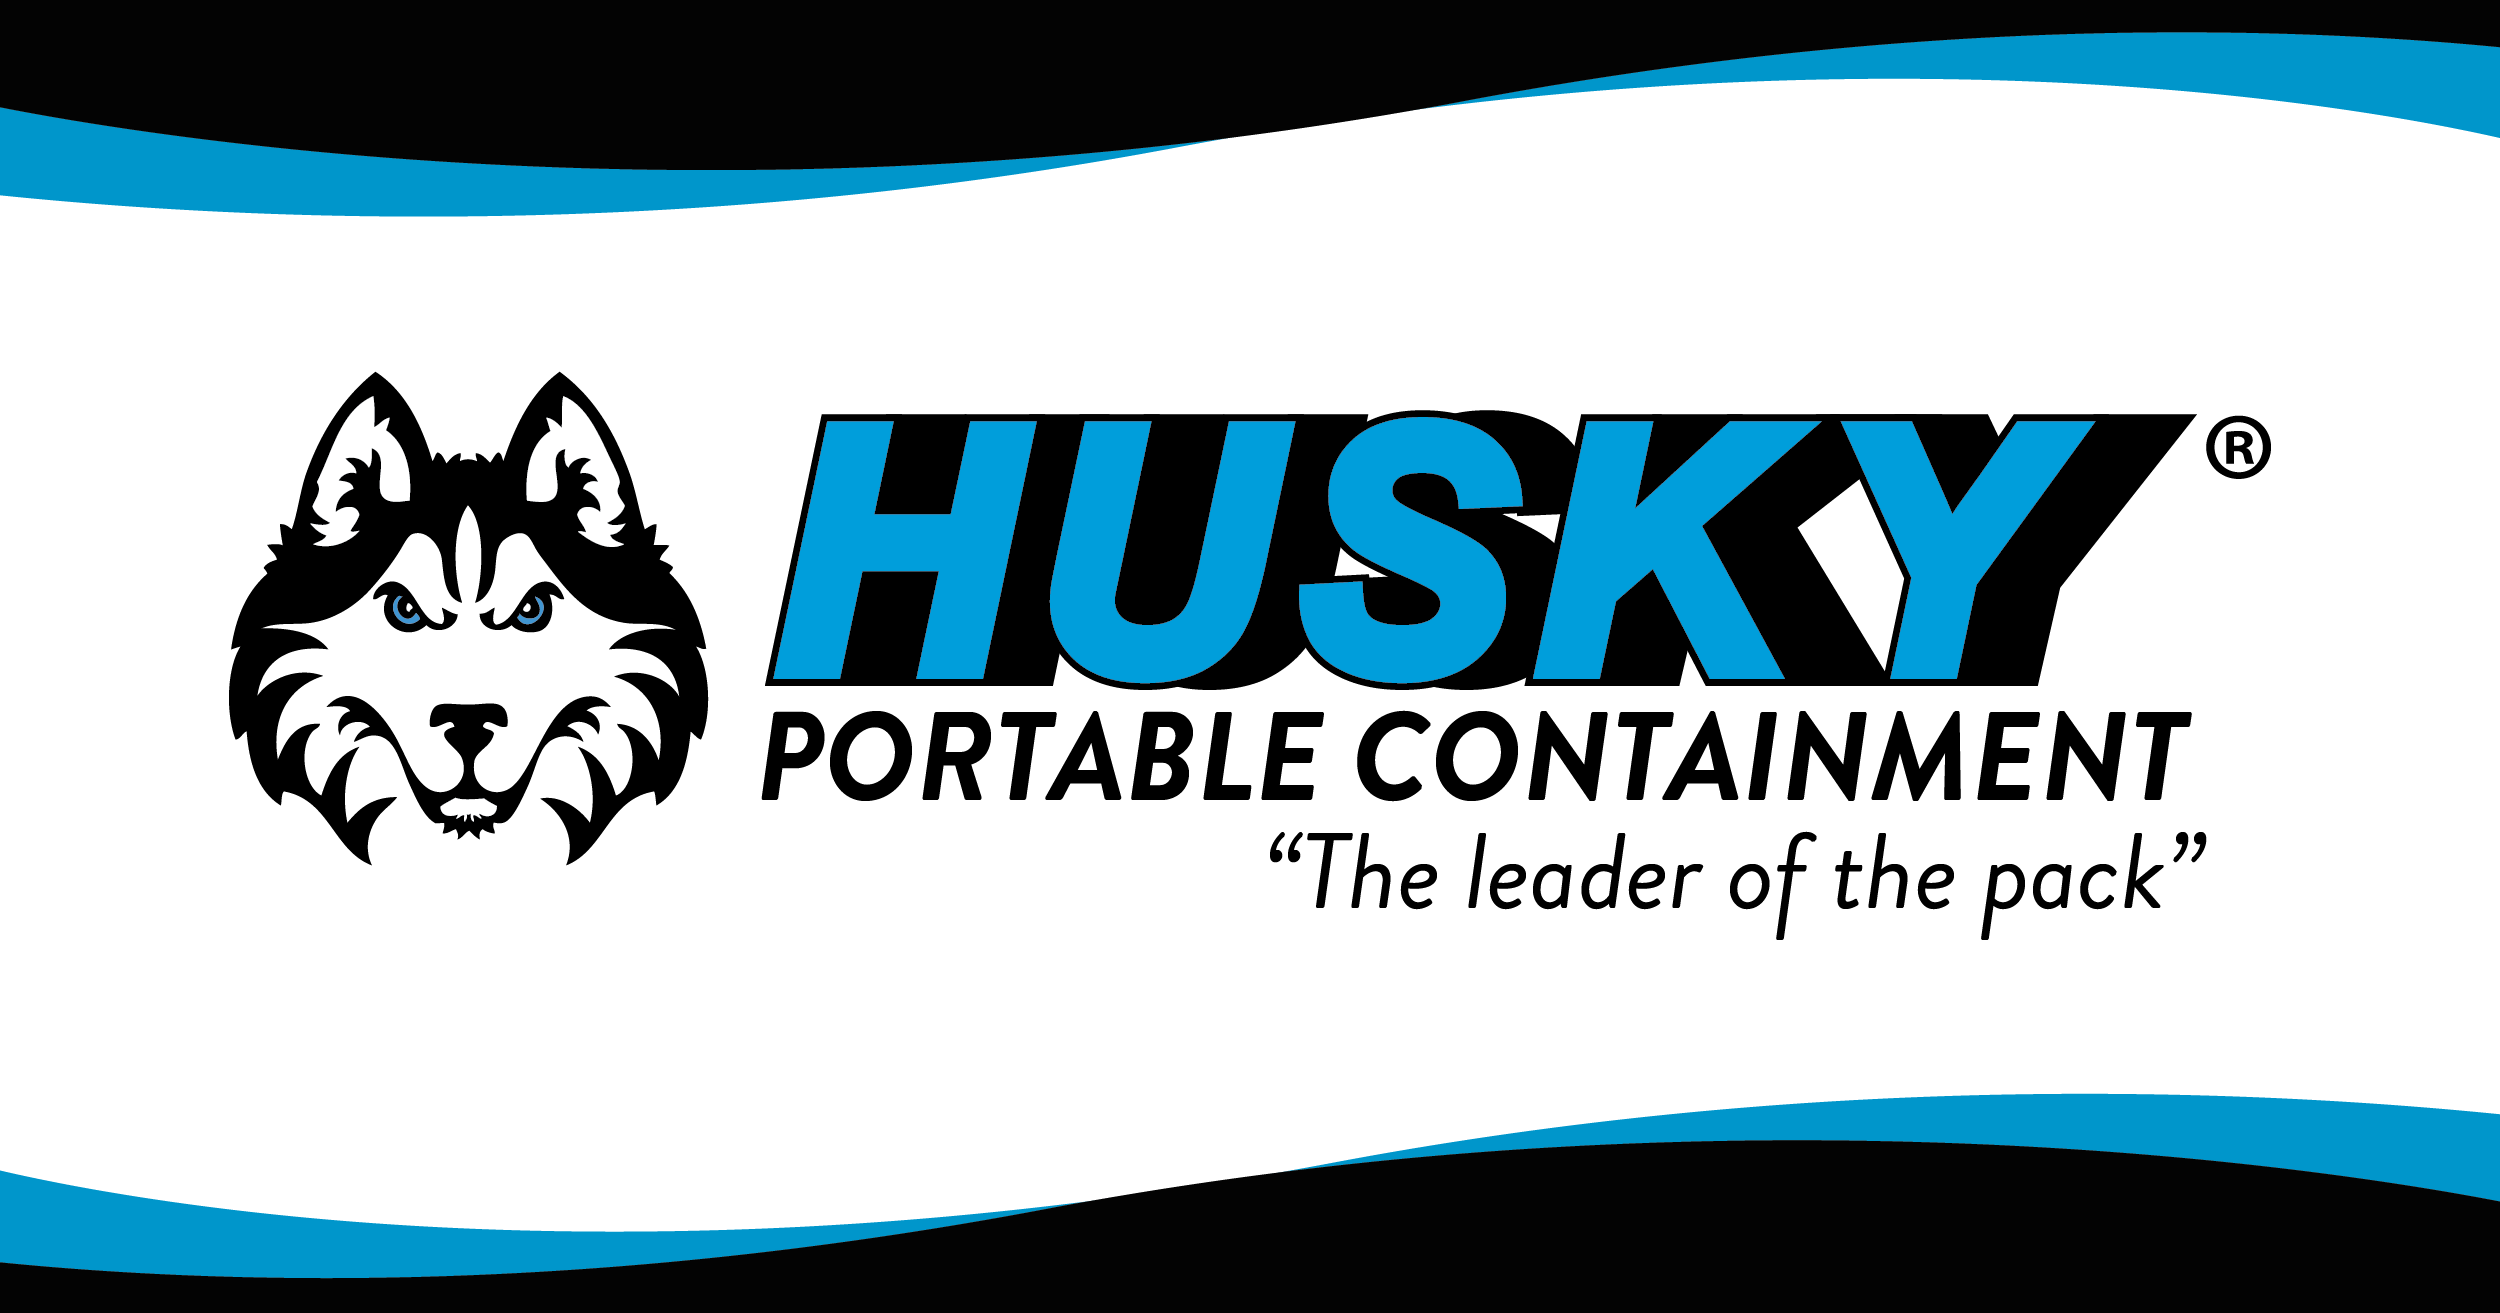 (c) Huskyportable.com